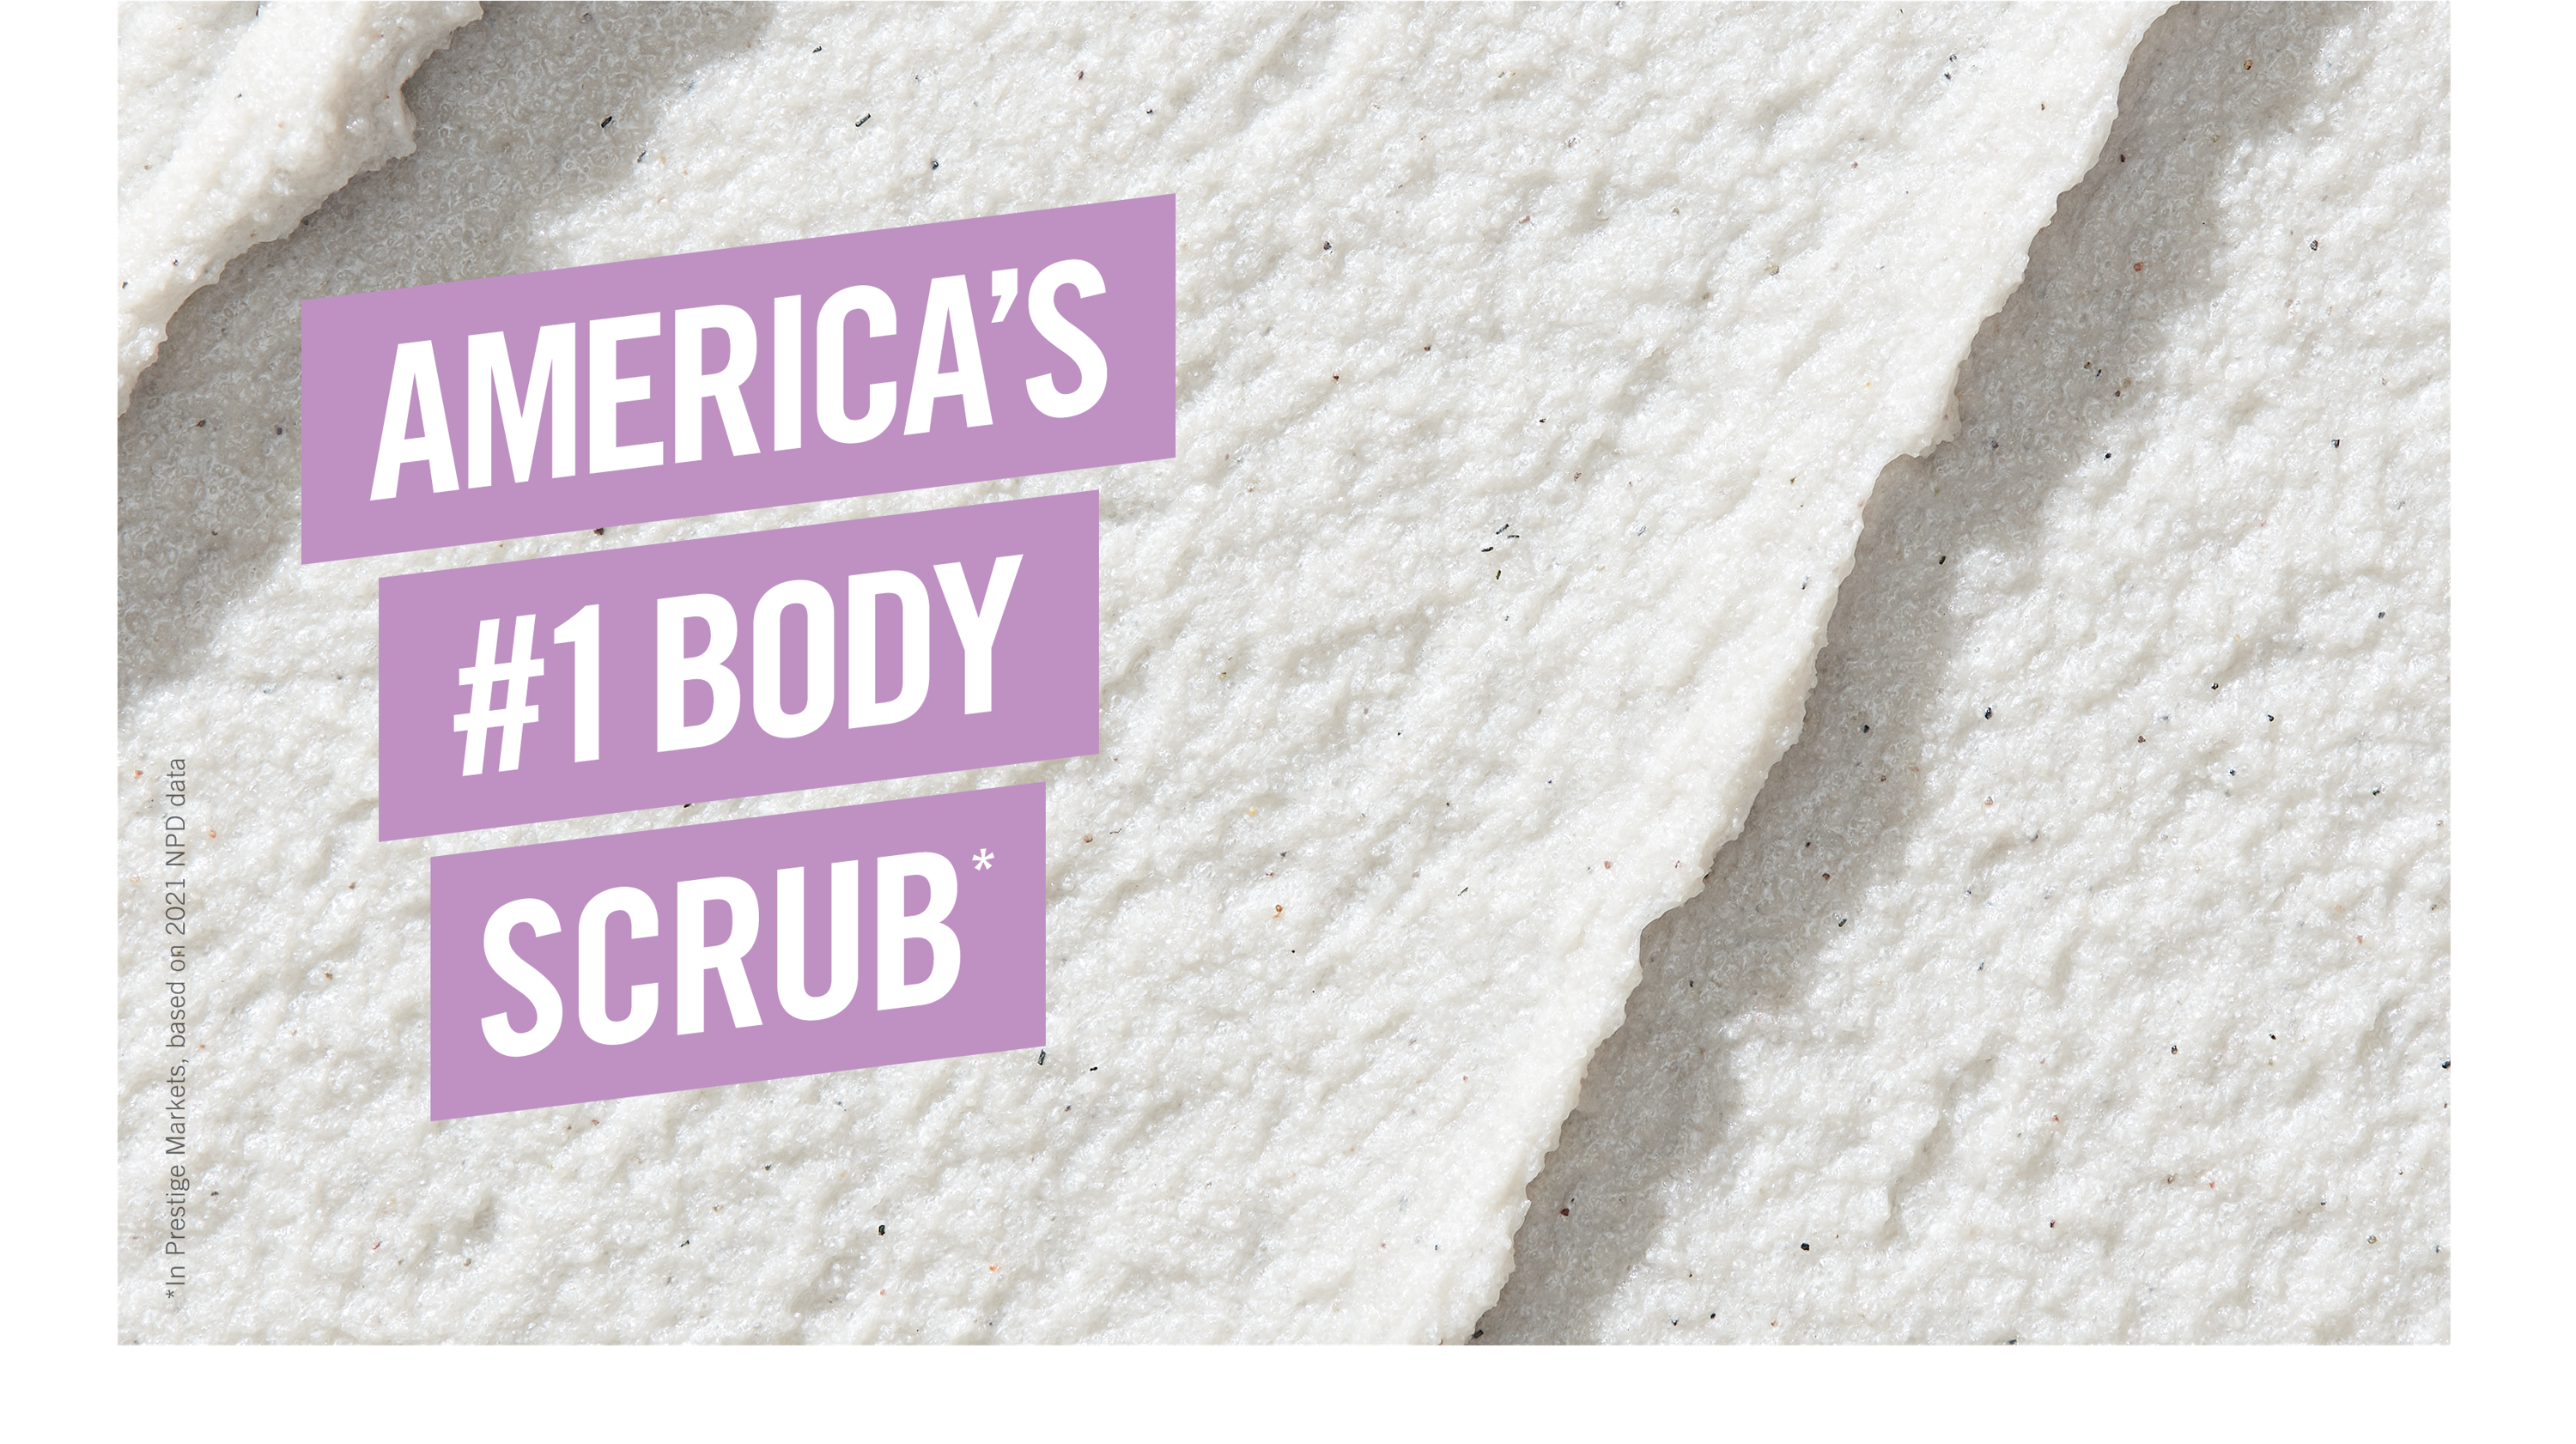 Texture of KP Bump Eraser Body Scrub. America's # 1 body scrub claim.